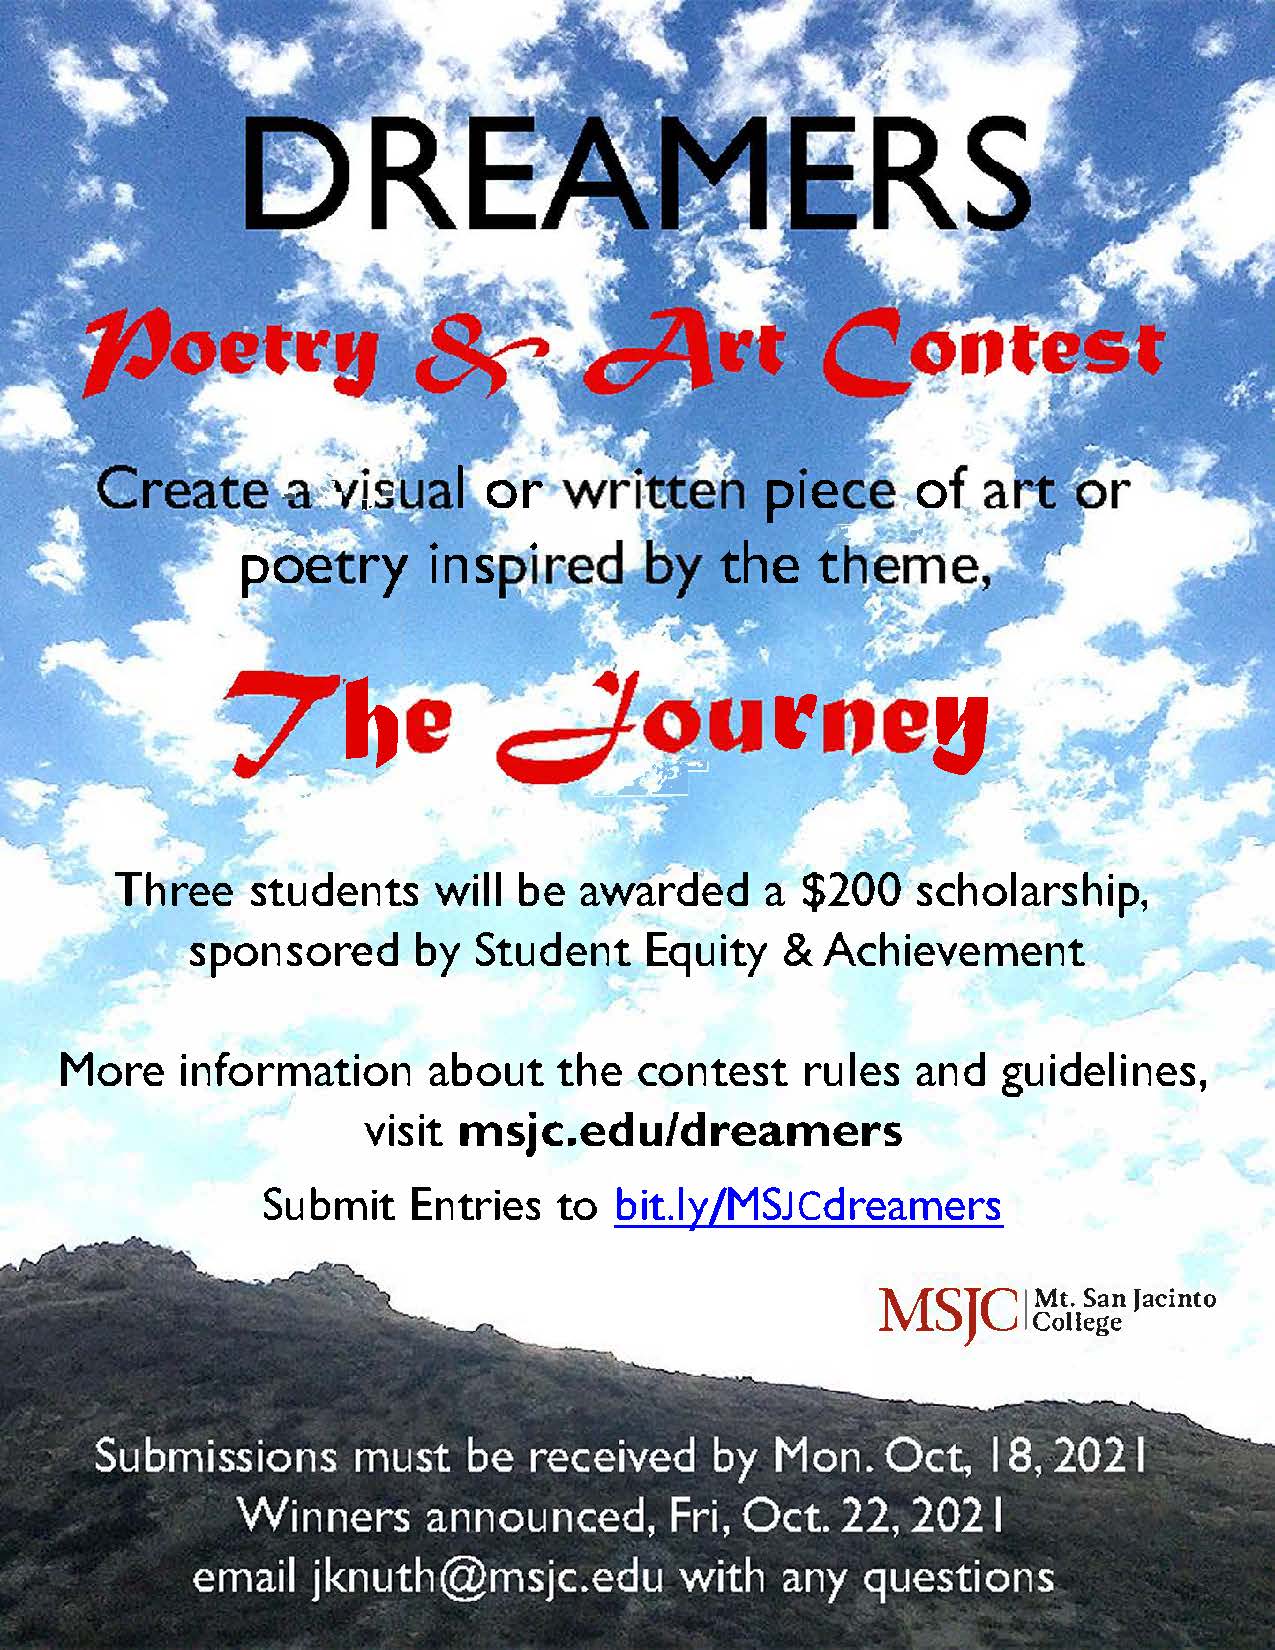 Dreamers Poetry & Art Contest